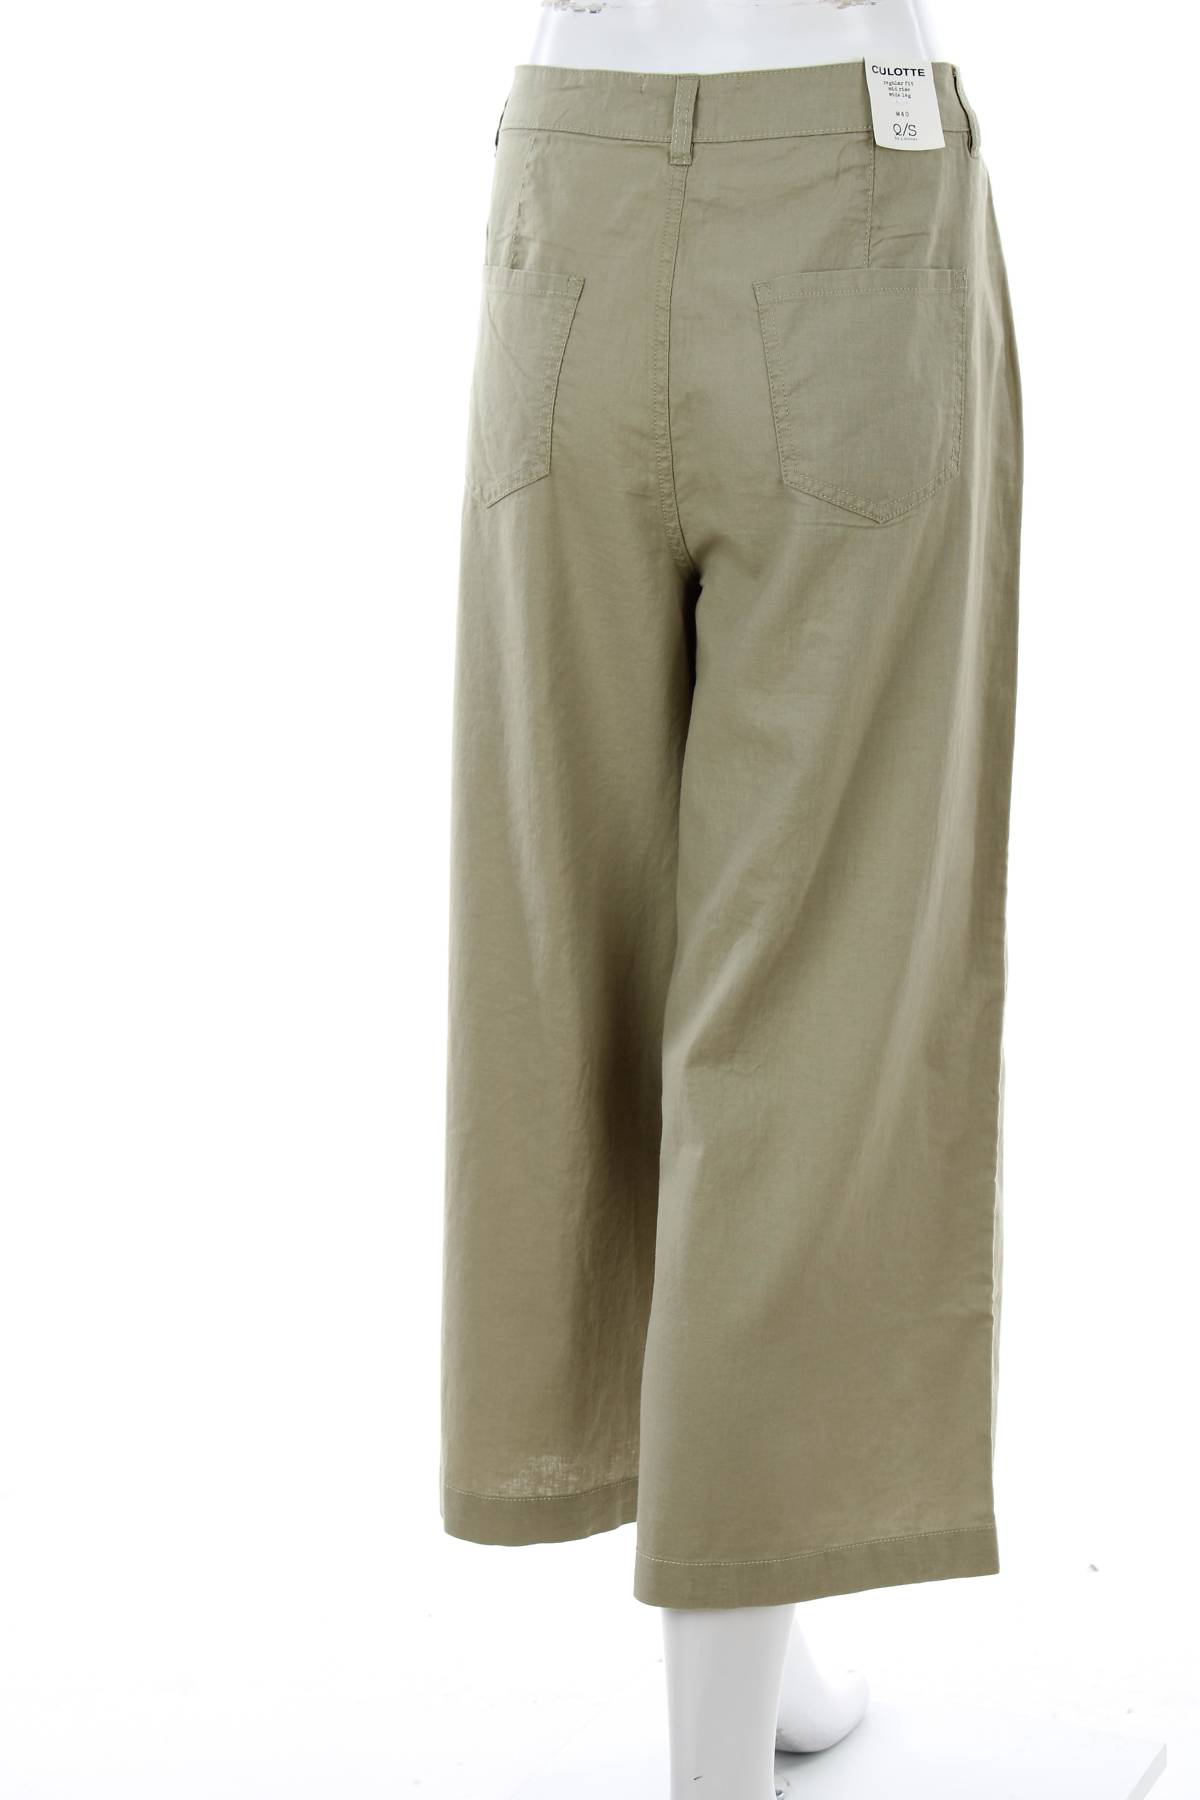 Дамски панталон Q/S designed by s.Oliver2